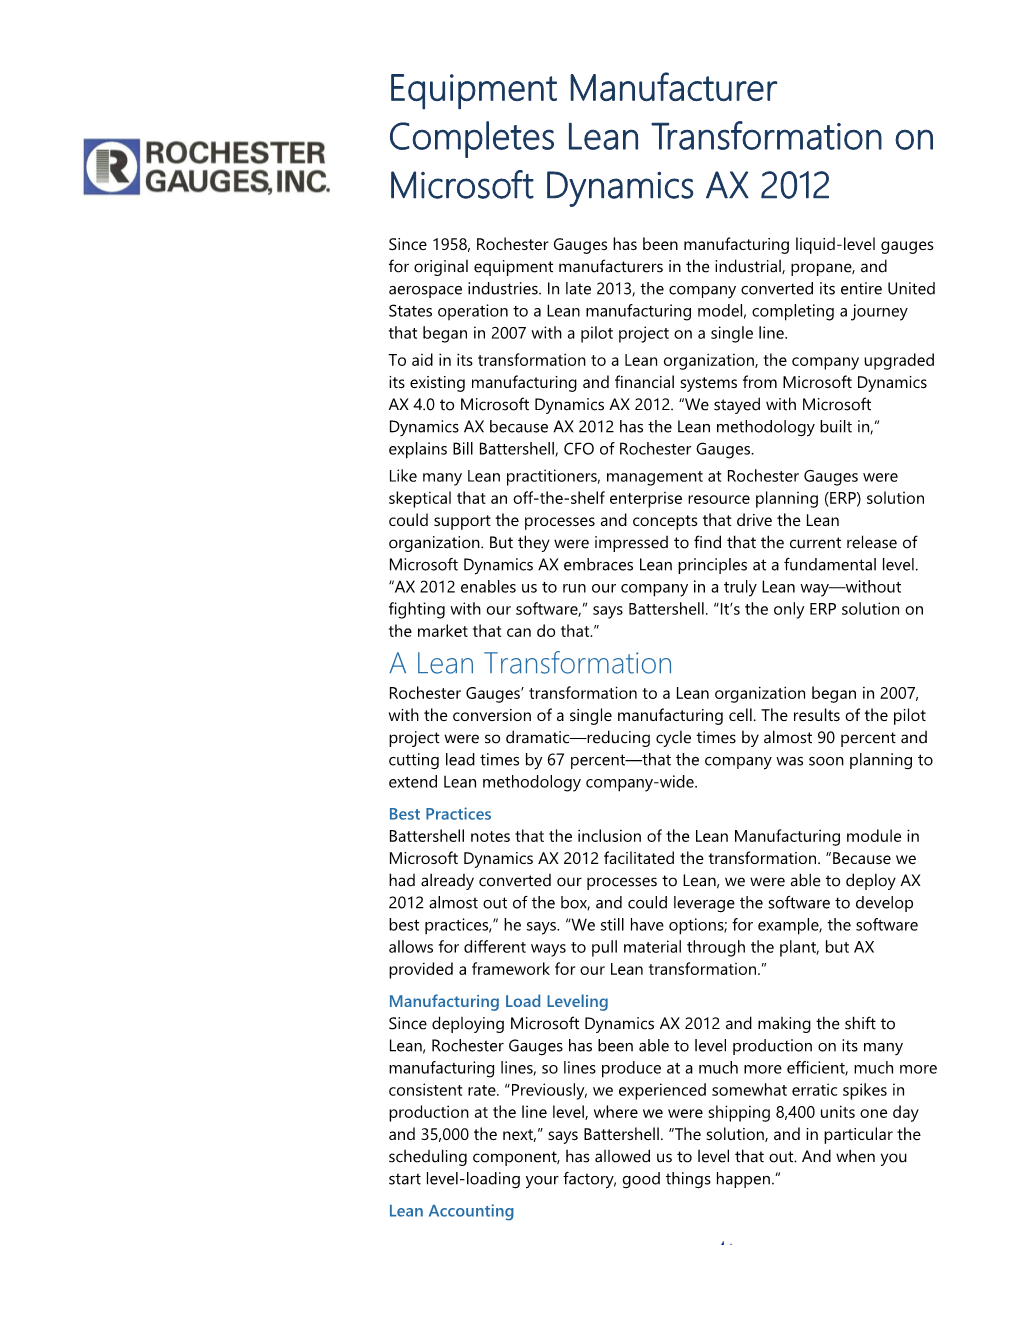 Equipment Manufacturer Completes Lean Transformation on Microsoftdynamics AX 2012